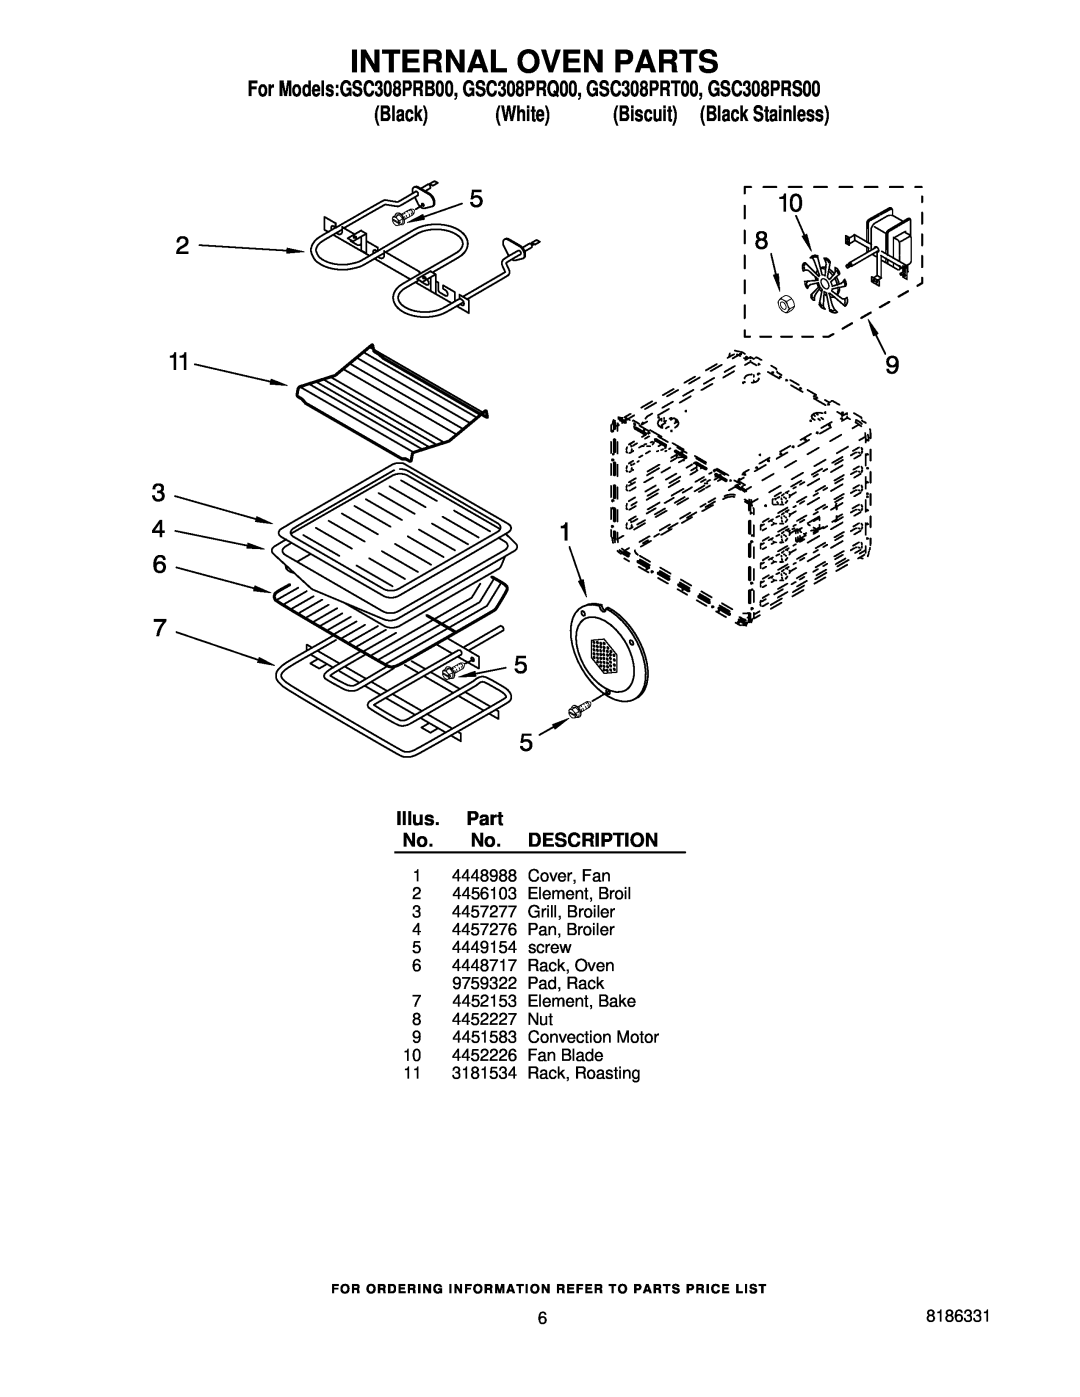 Whirlpool GSC308PRQ00 manual Internal Oven Parts, White, Illus. Part No. No. DESCRIPTION, Biscuit Black Stainless 